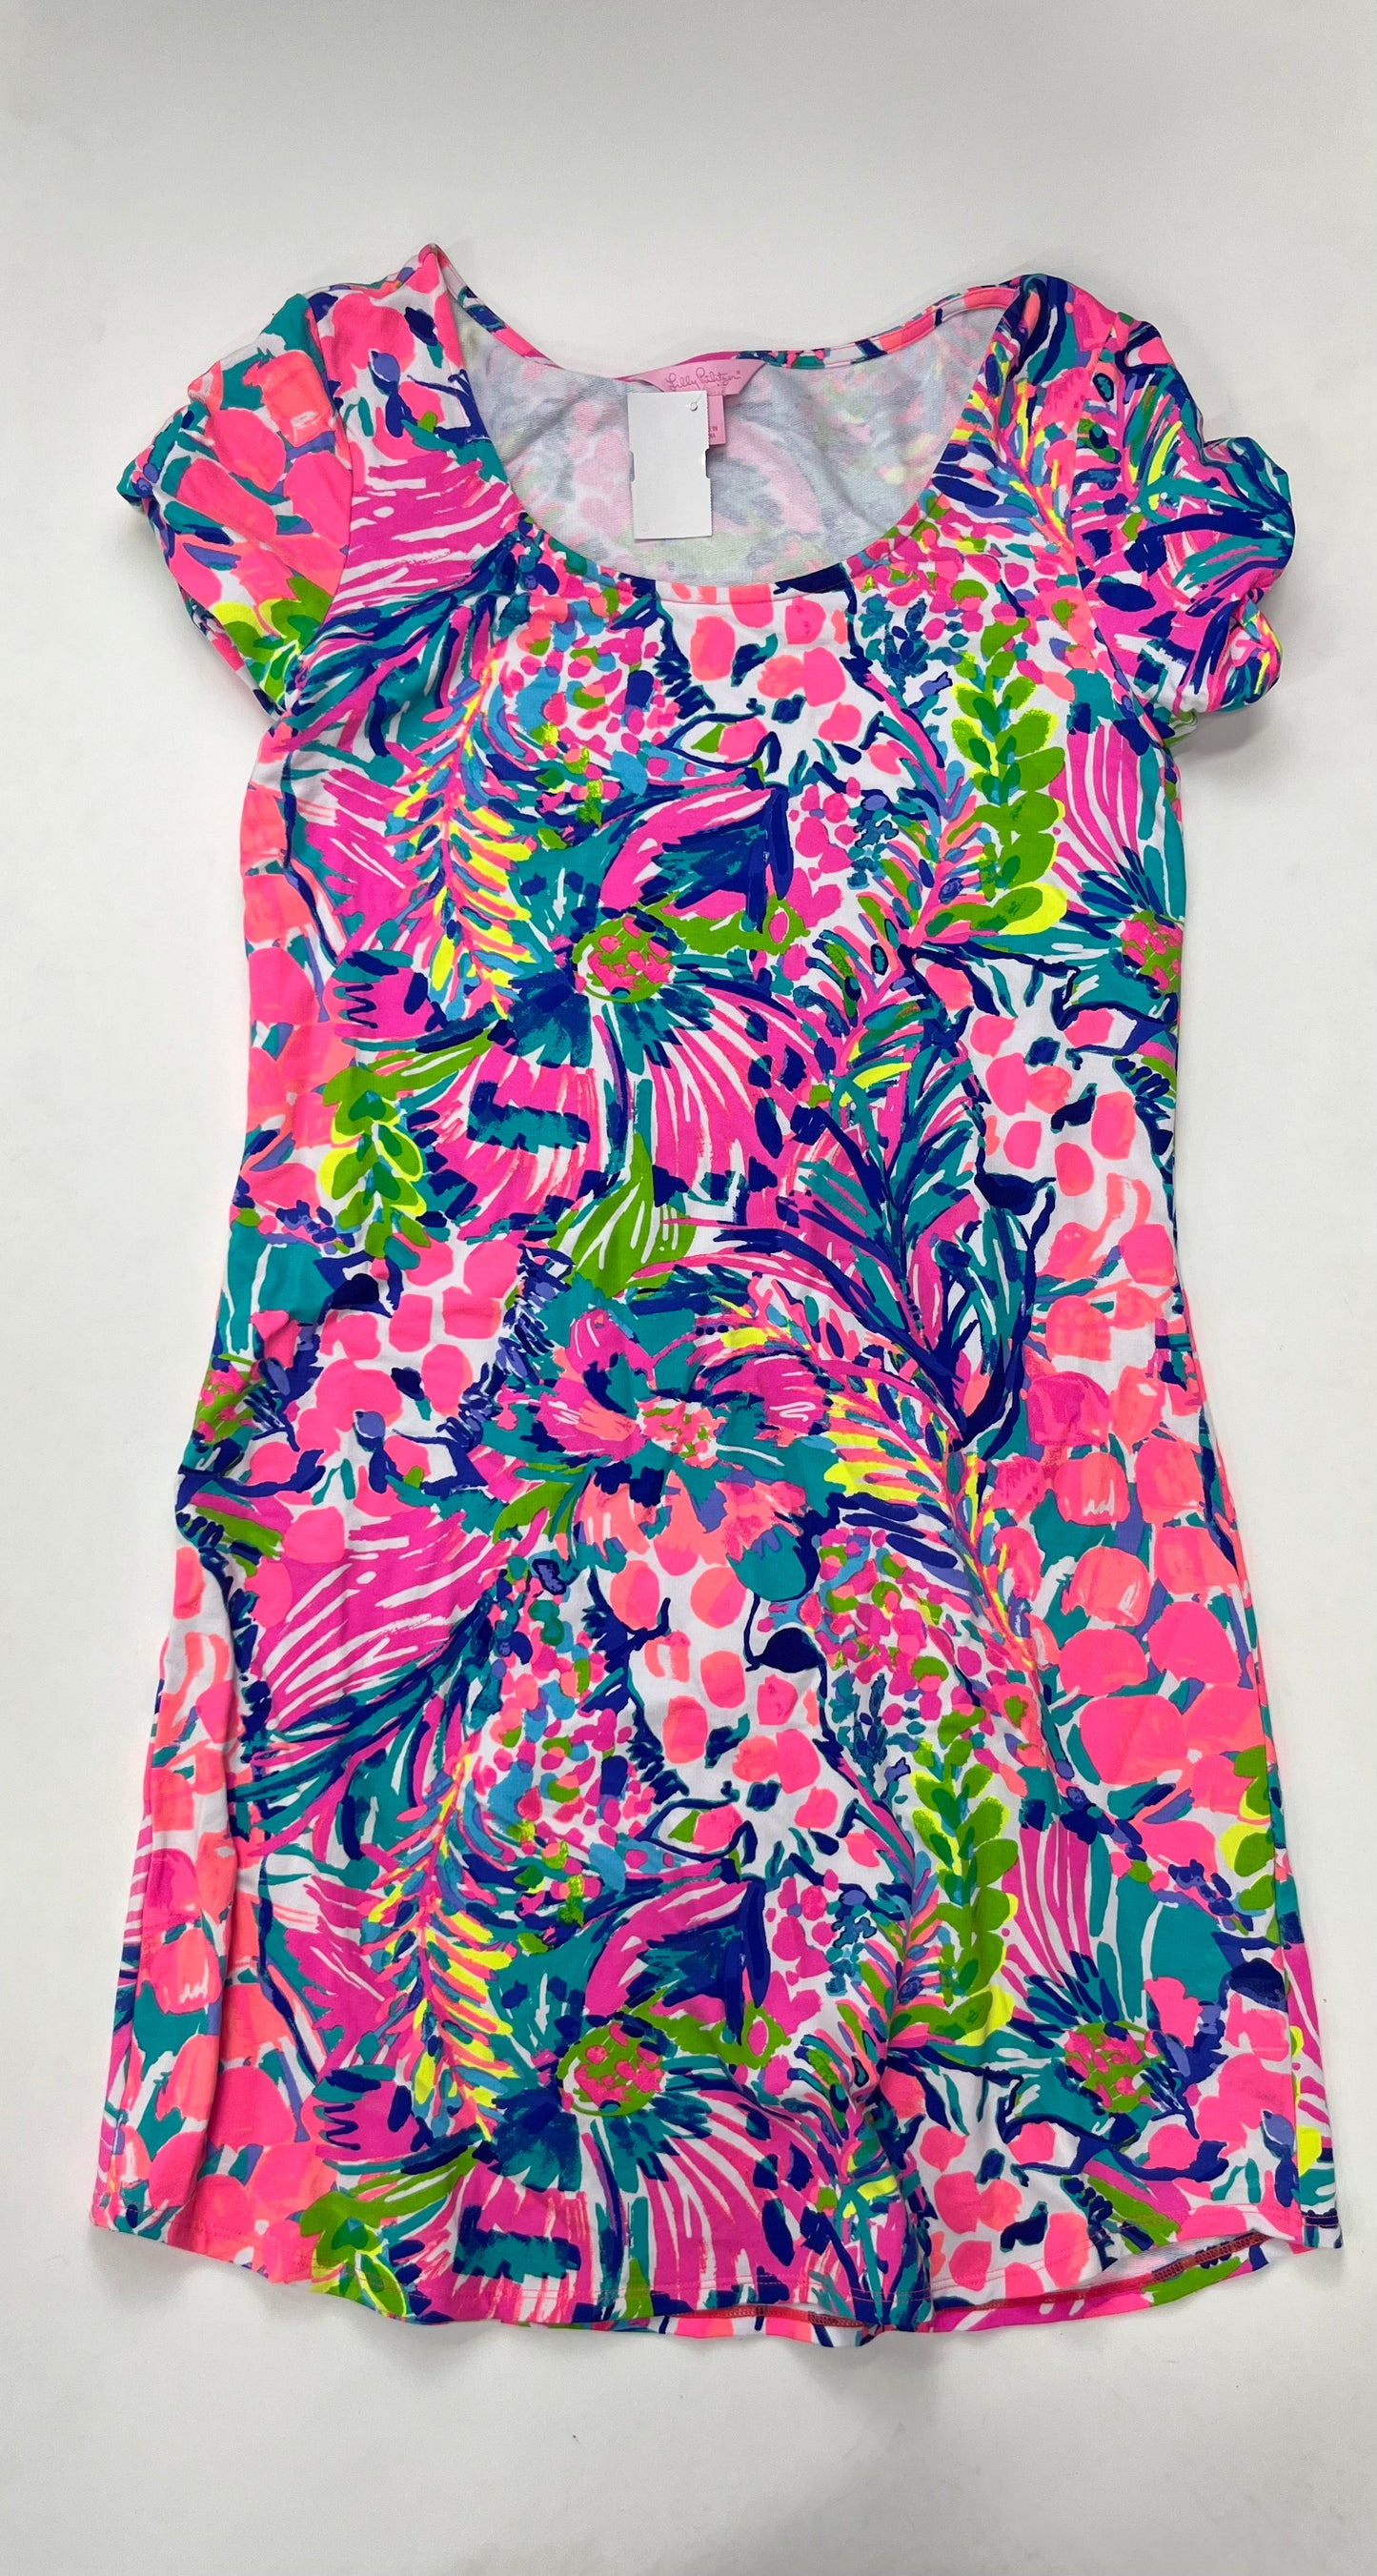 Multi-colored Dress Casual Midi Lilly Pulitzer, Size S